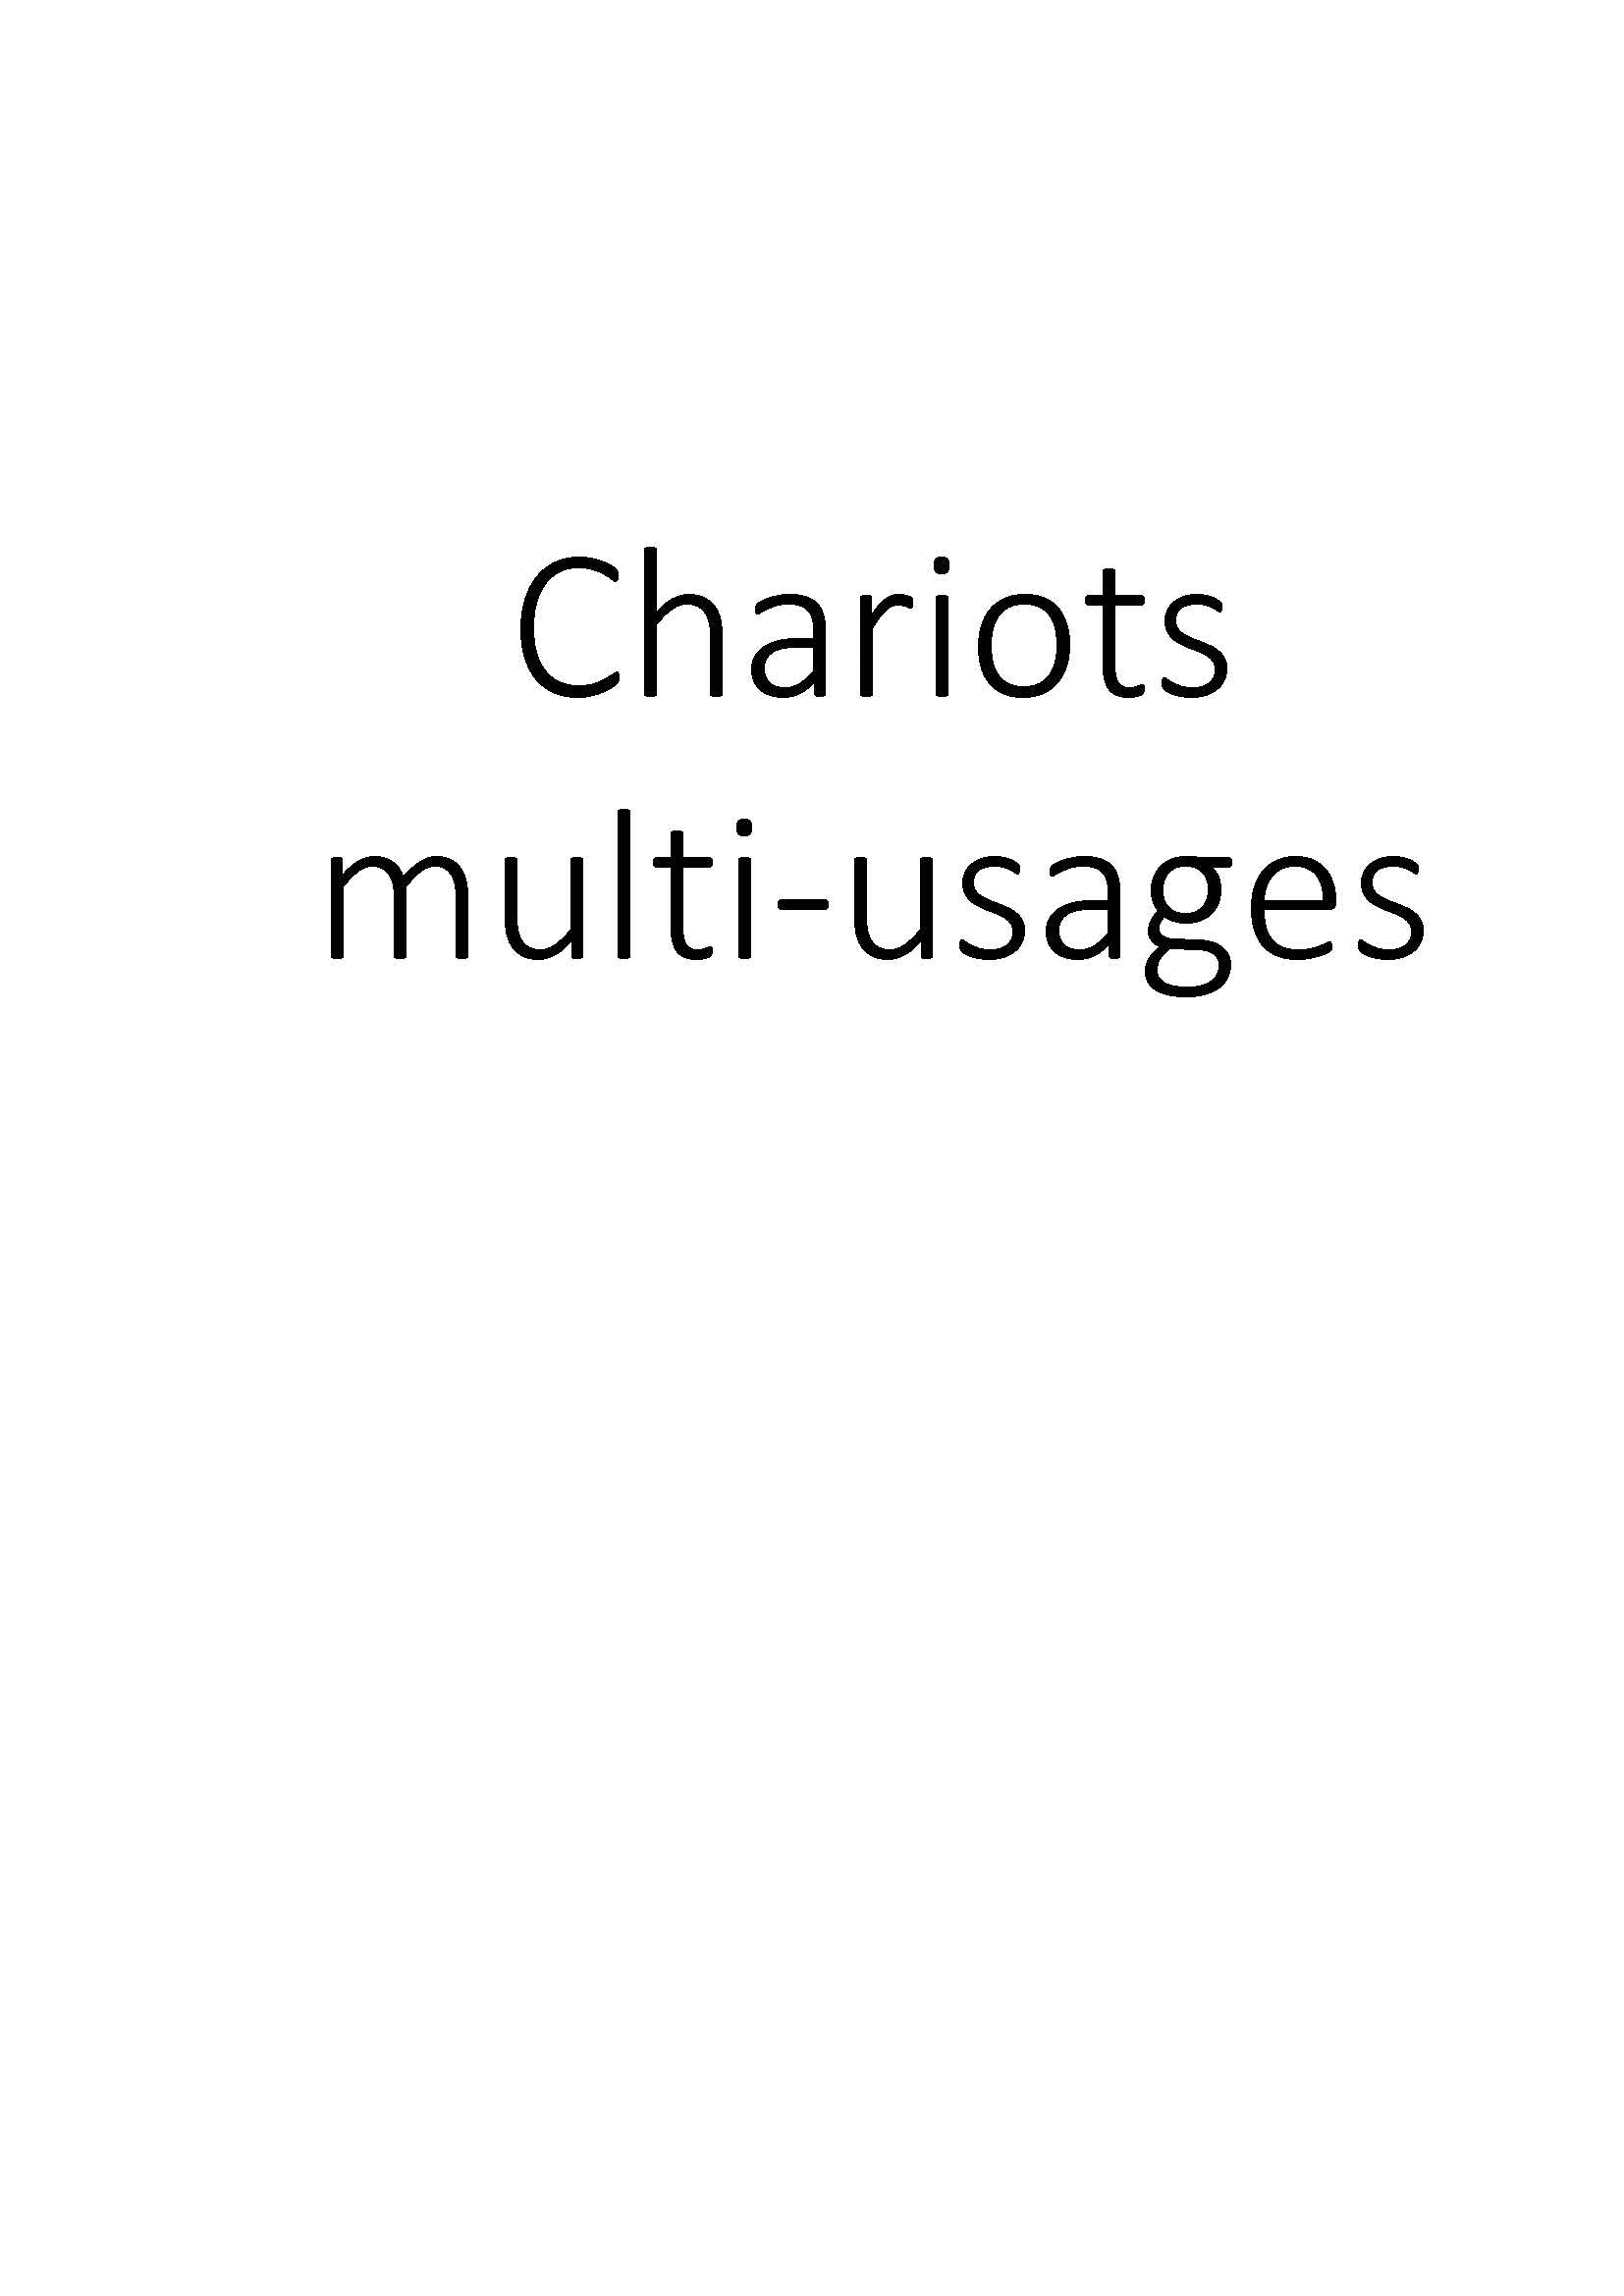 Chariots multi-usages clicktofournisseur.com